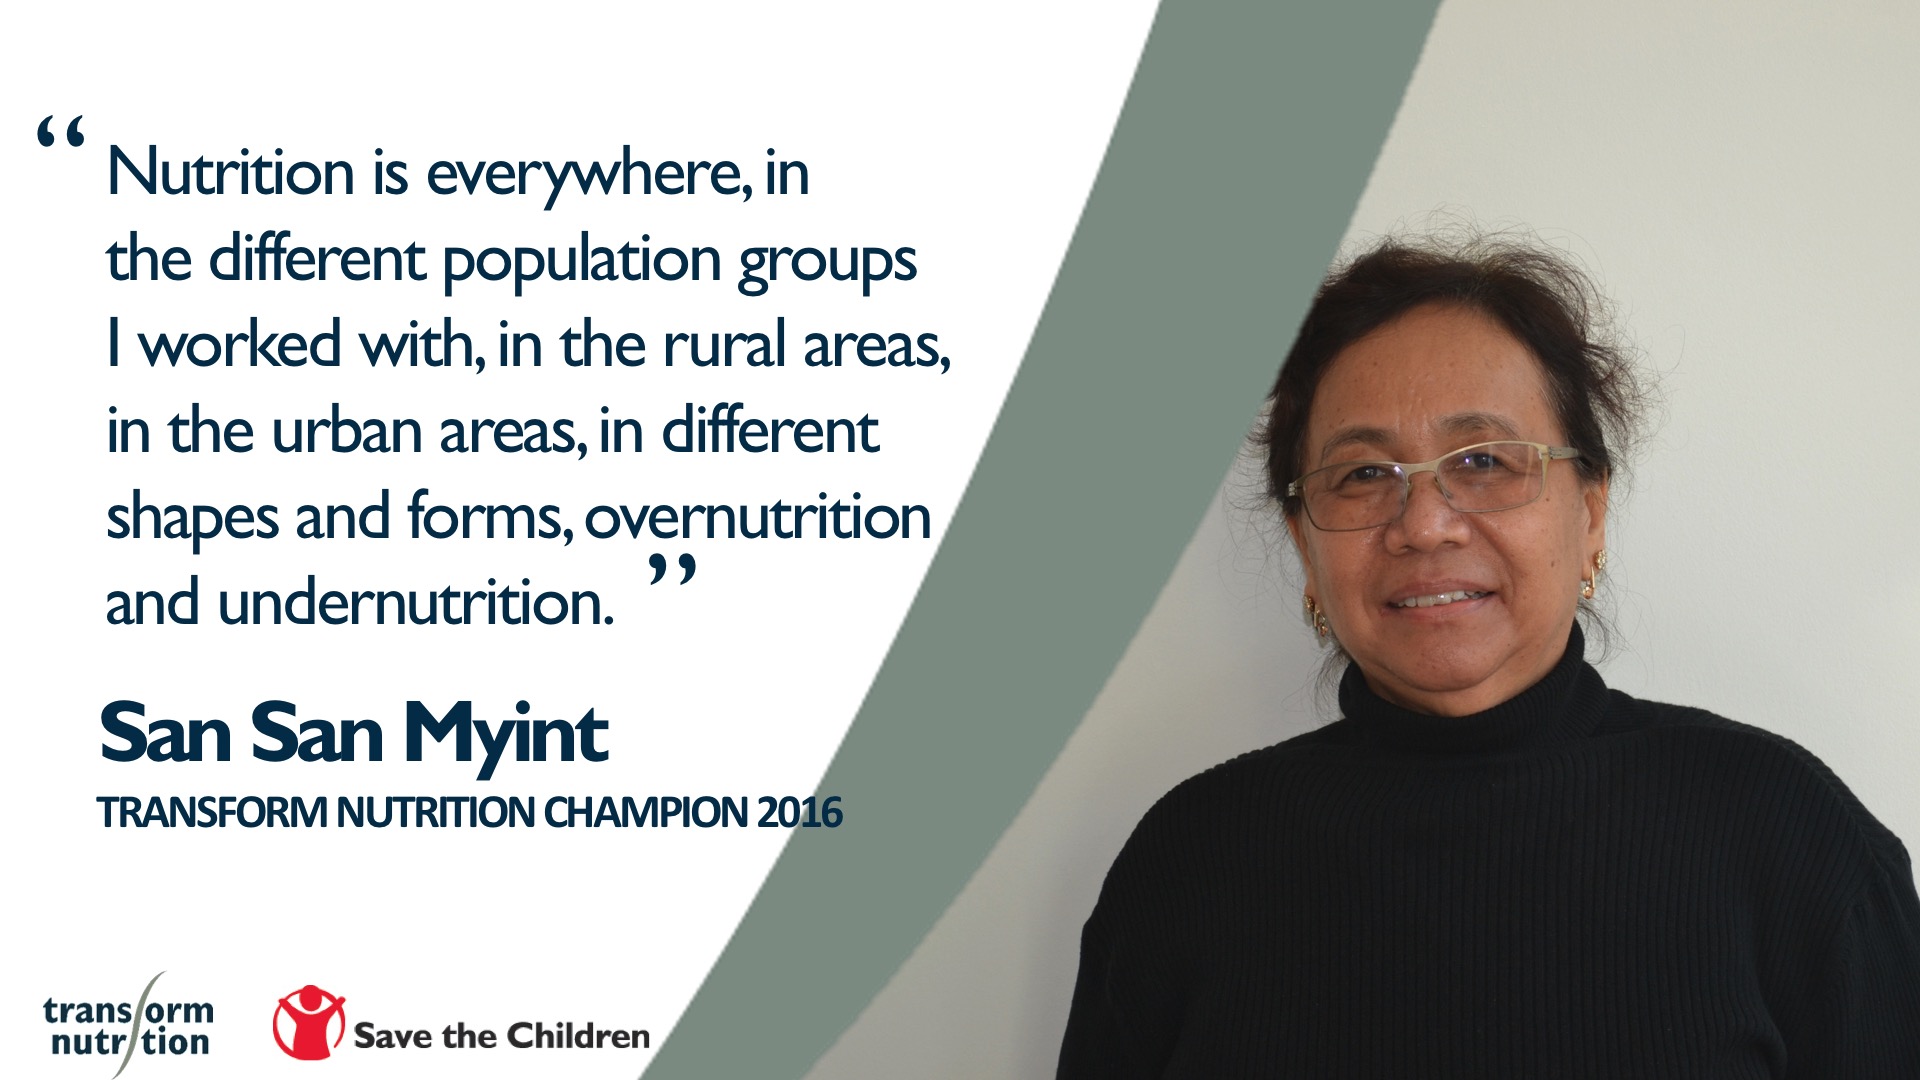 San San Myint of Myanmar – 2016 Transform Nutrition Champion